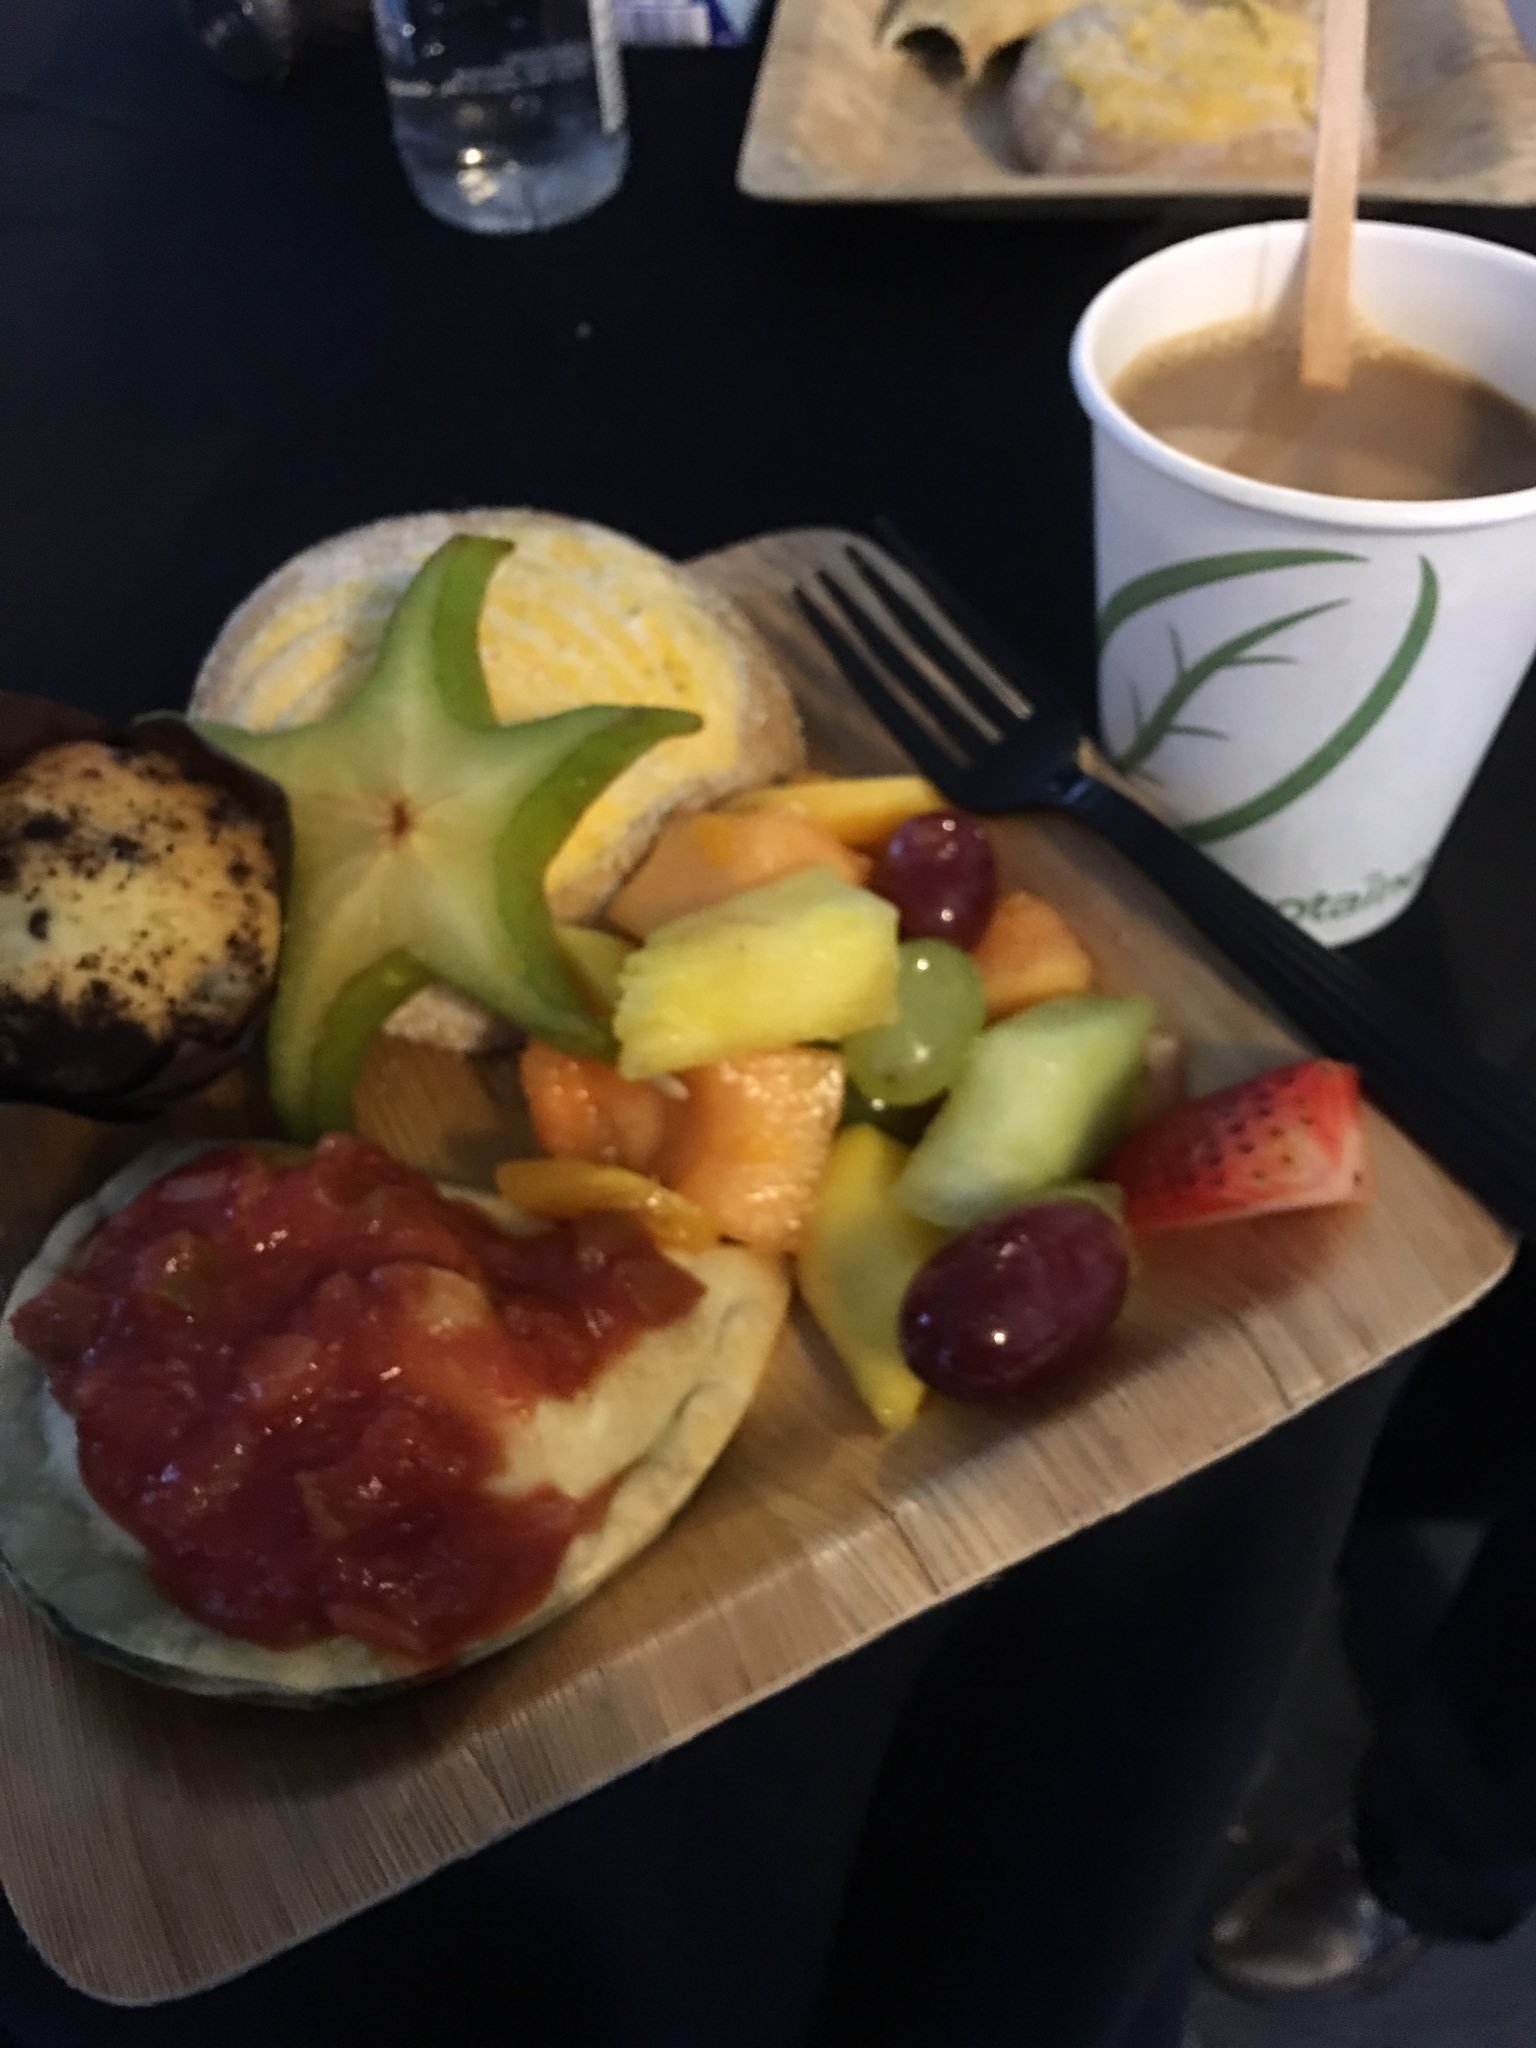 Breakfast this morning at #adelanteprinceton - veggie empanada and pan dulce! I had the beef empanada later😊 https://t.co/uLJXgSMlsF